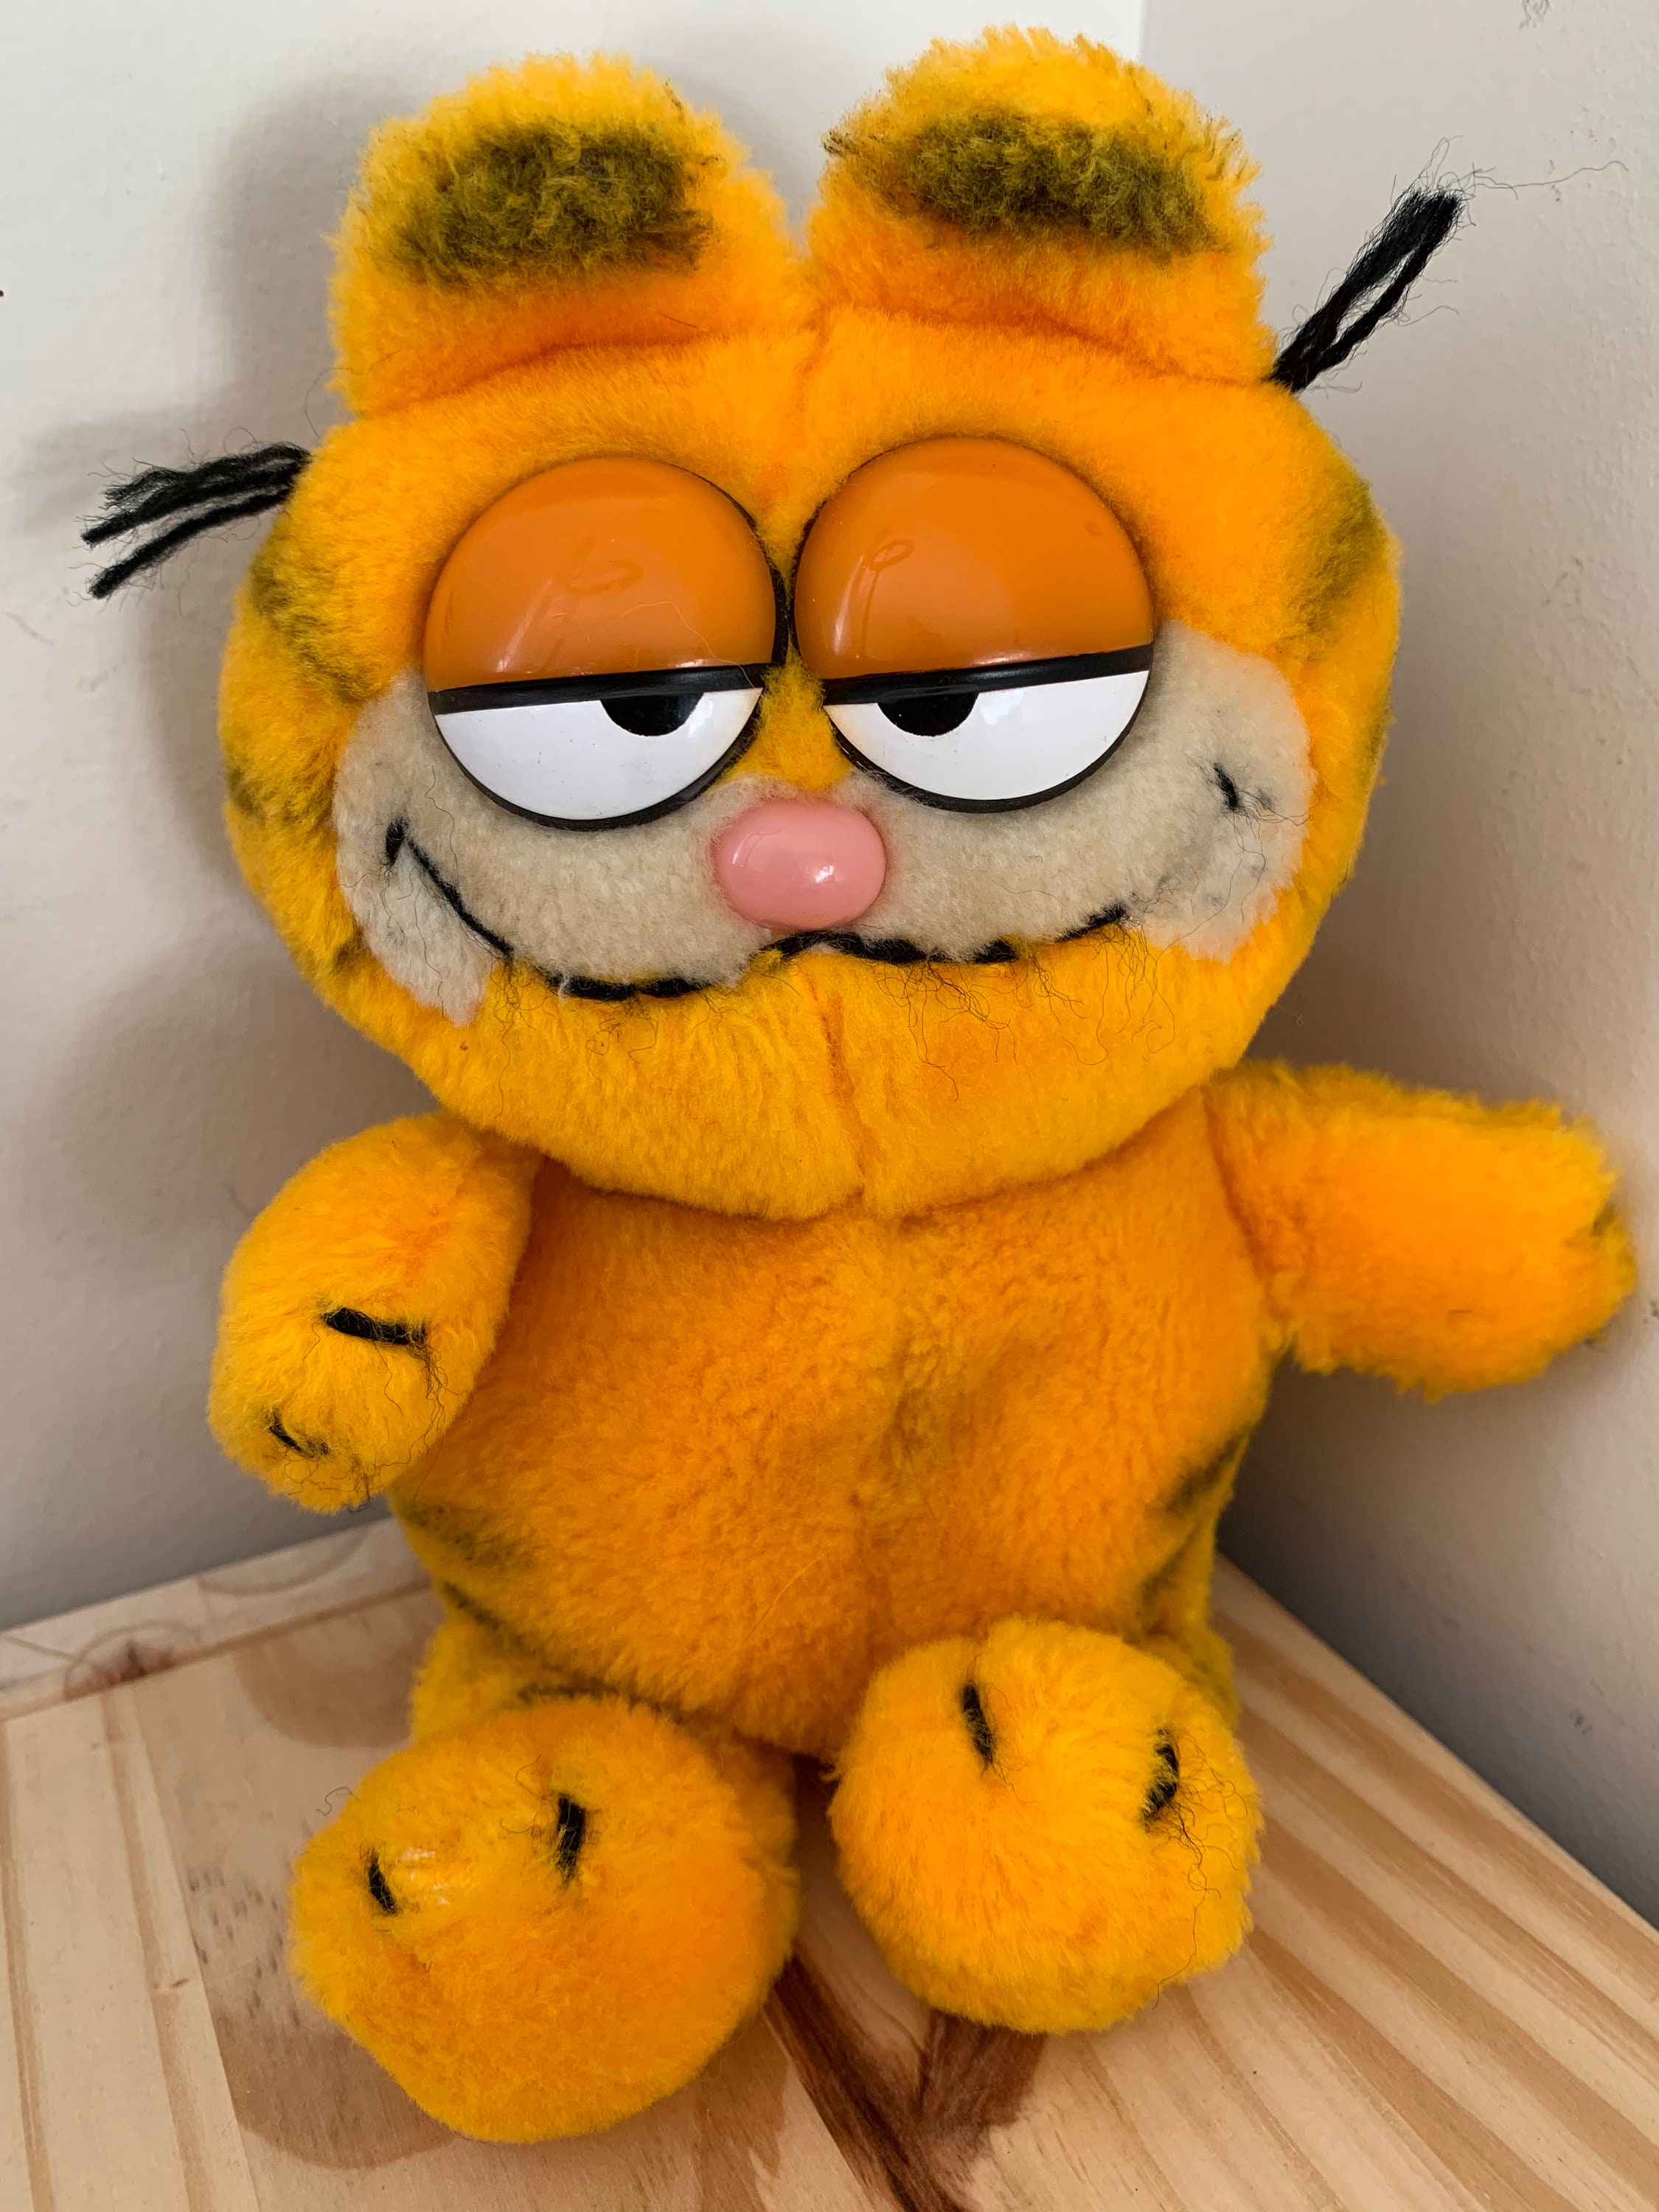 Universal - Peluche Garfield chat peluche peluche poupée peluche